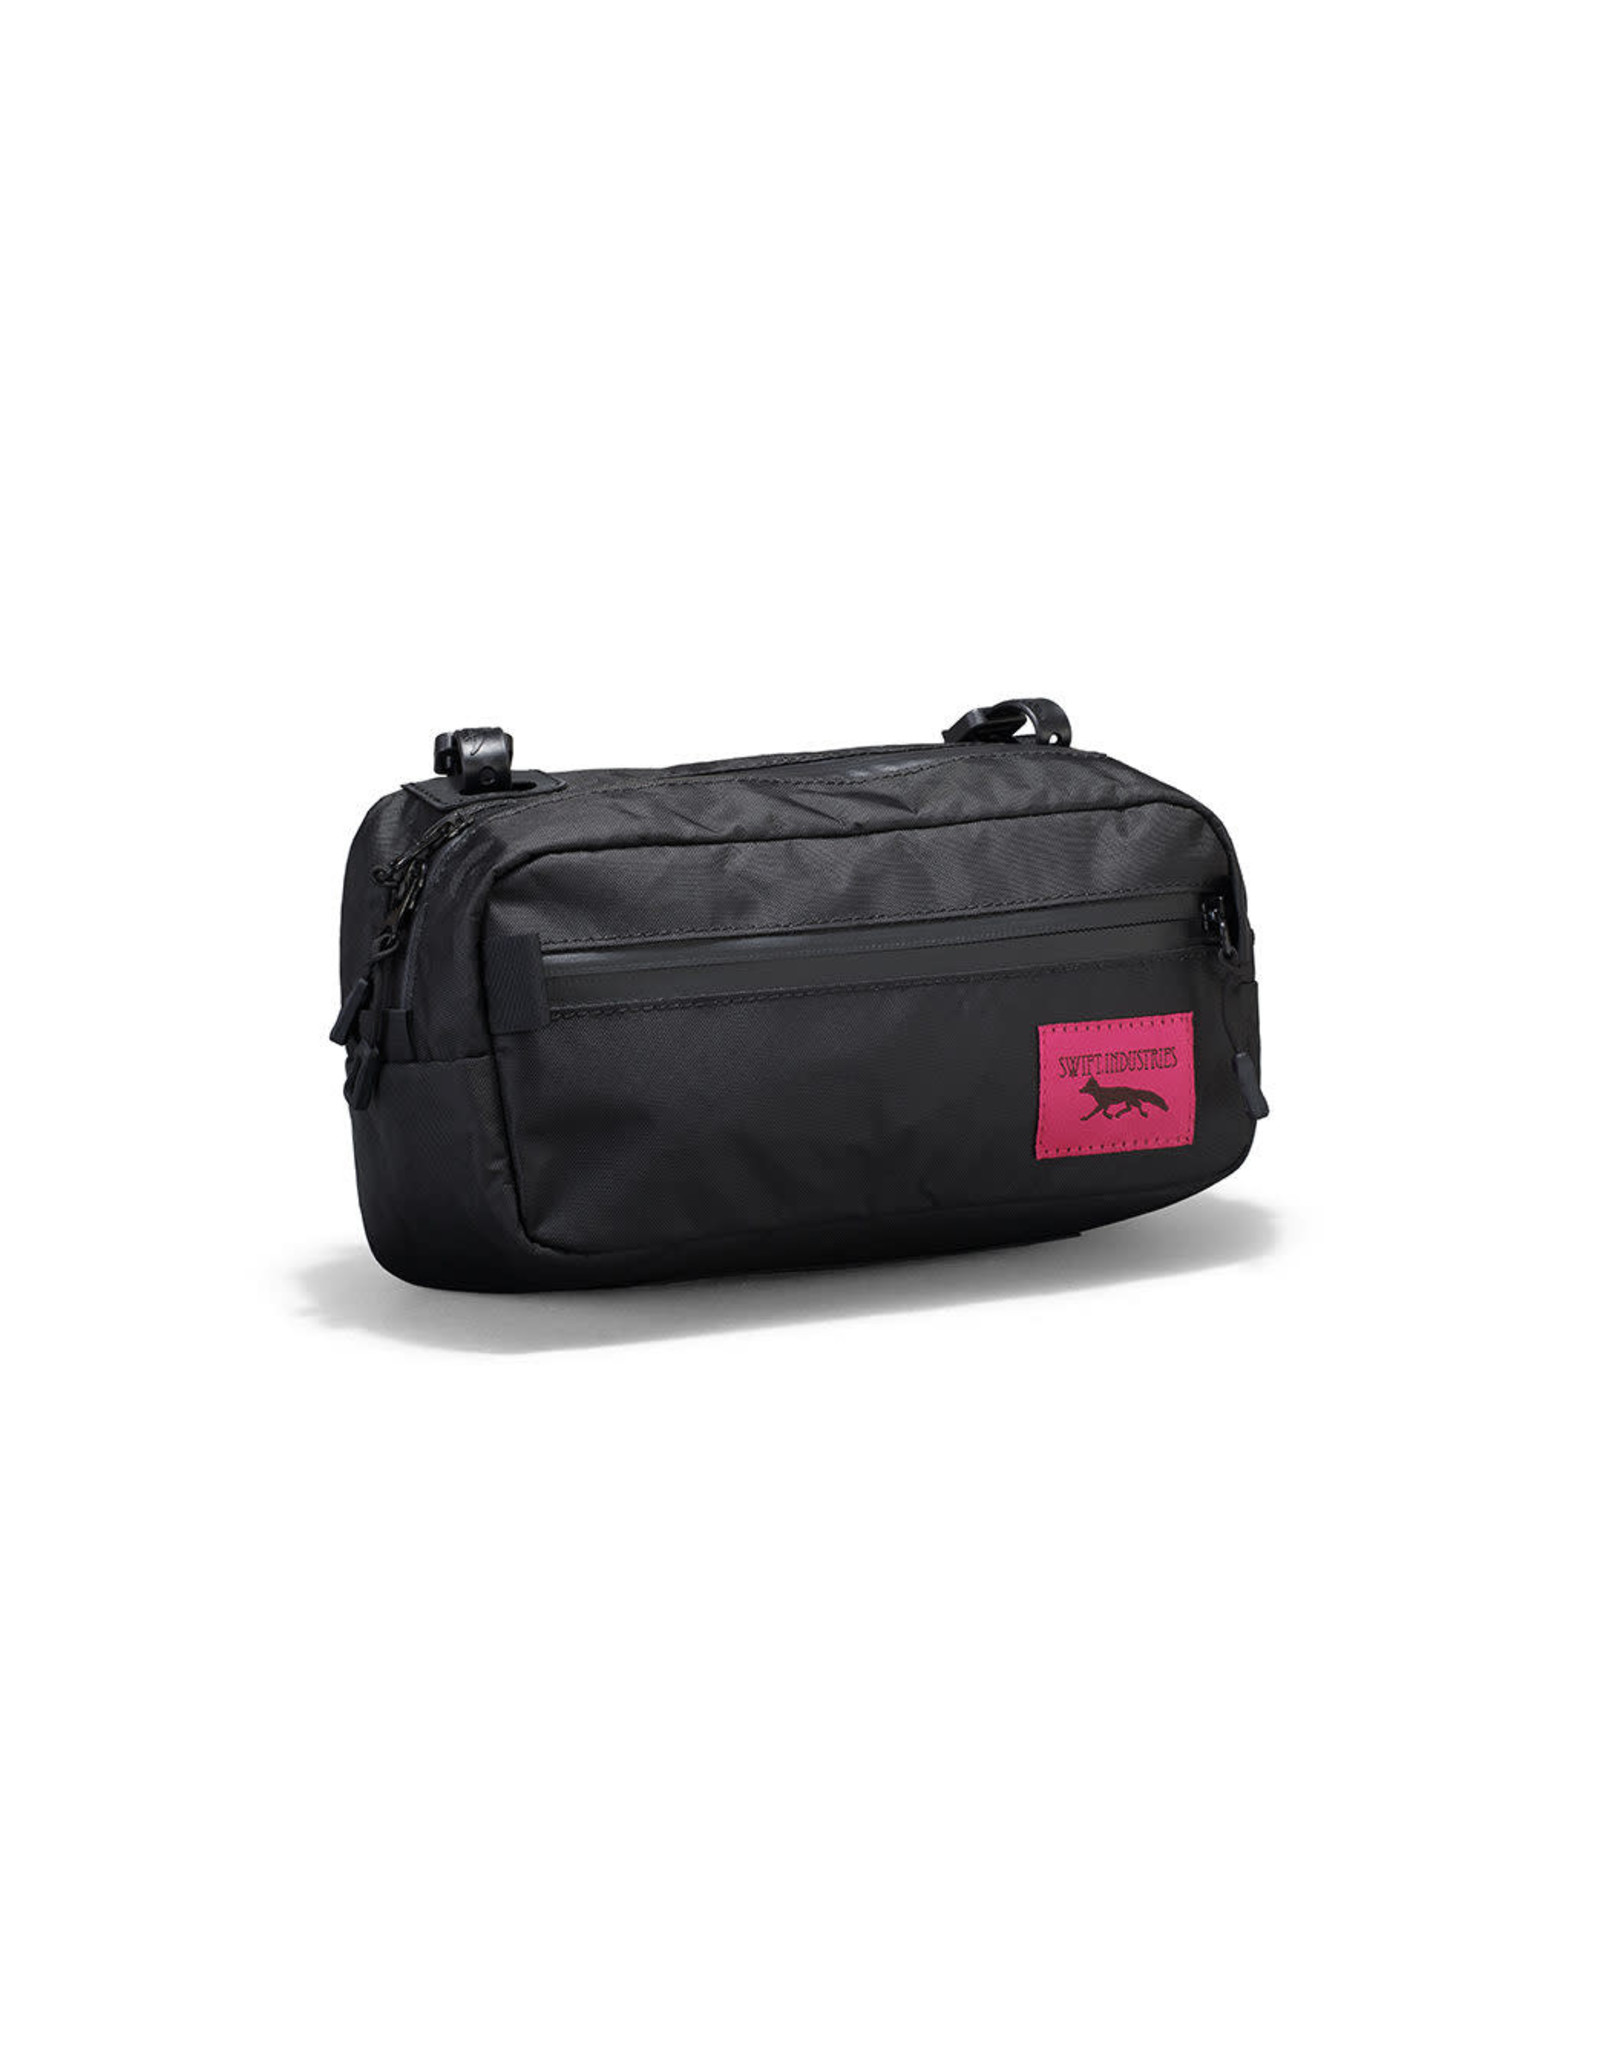 Swift Industries Swift Industries Kestrel Handlebar Bag, Black